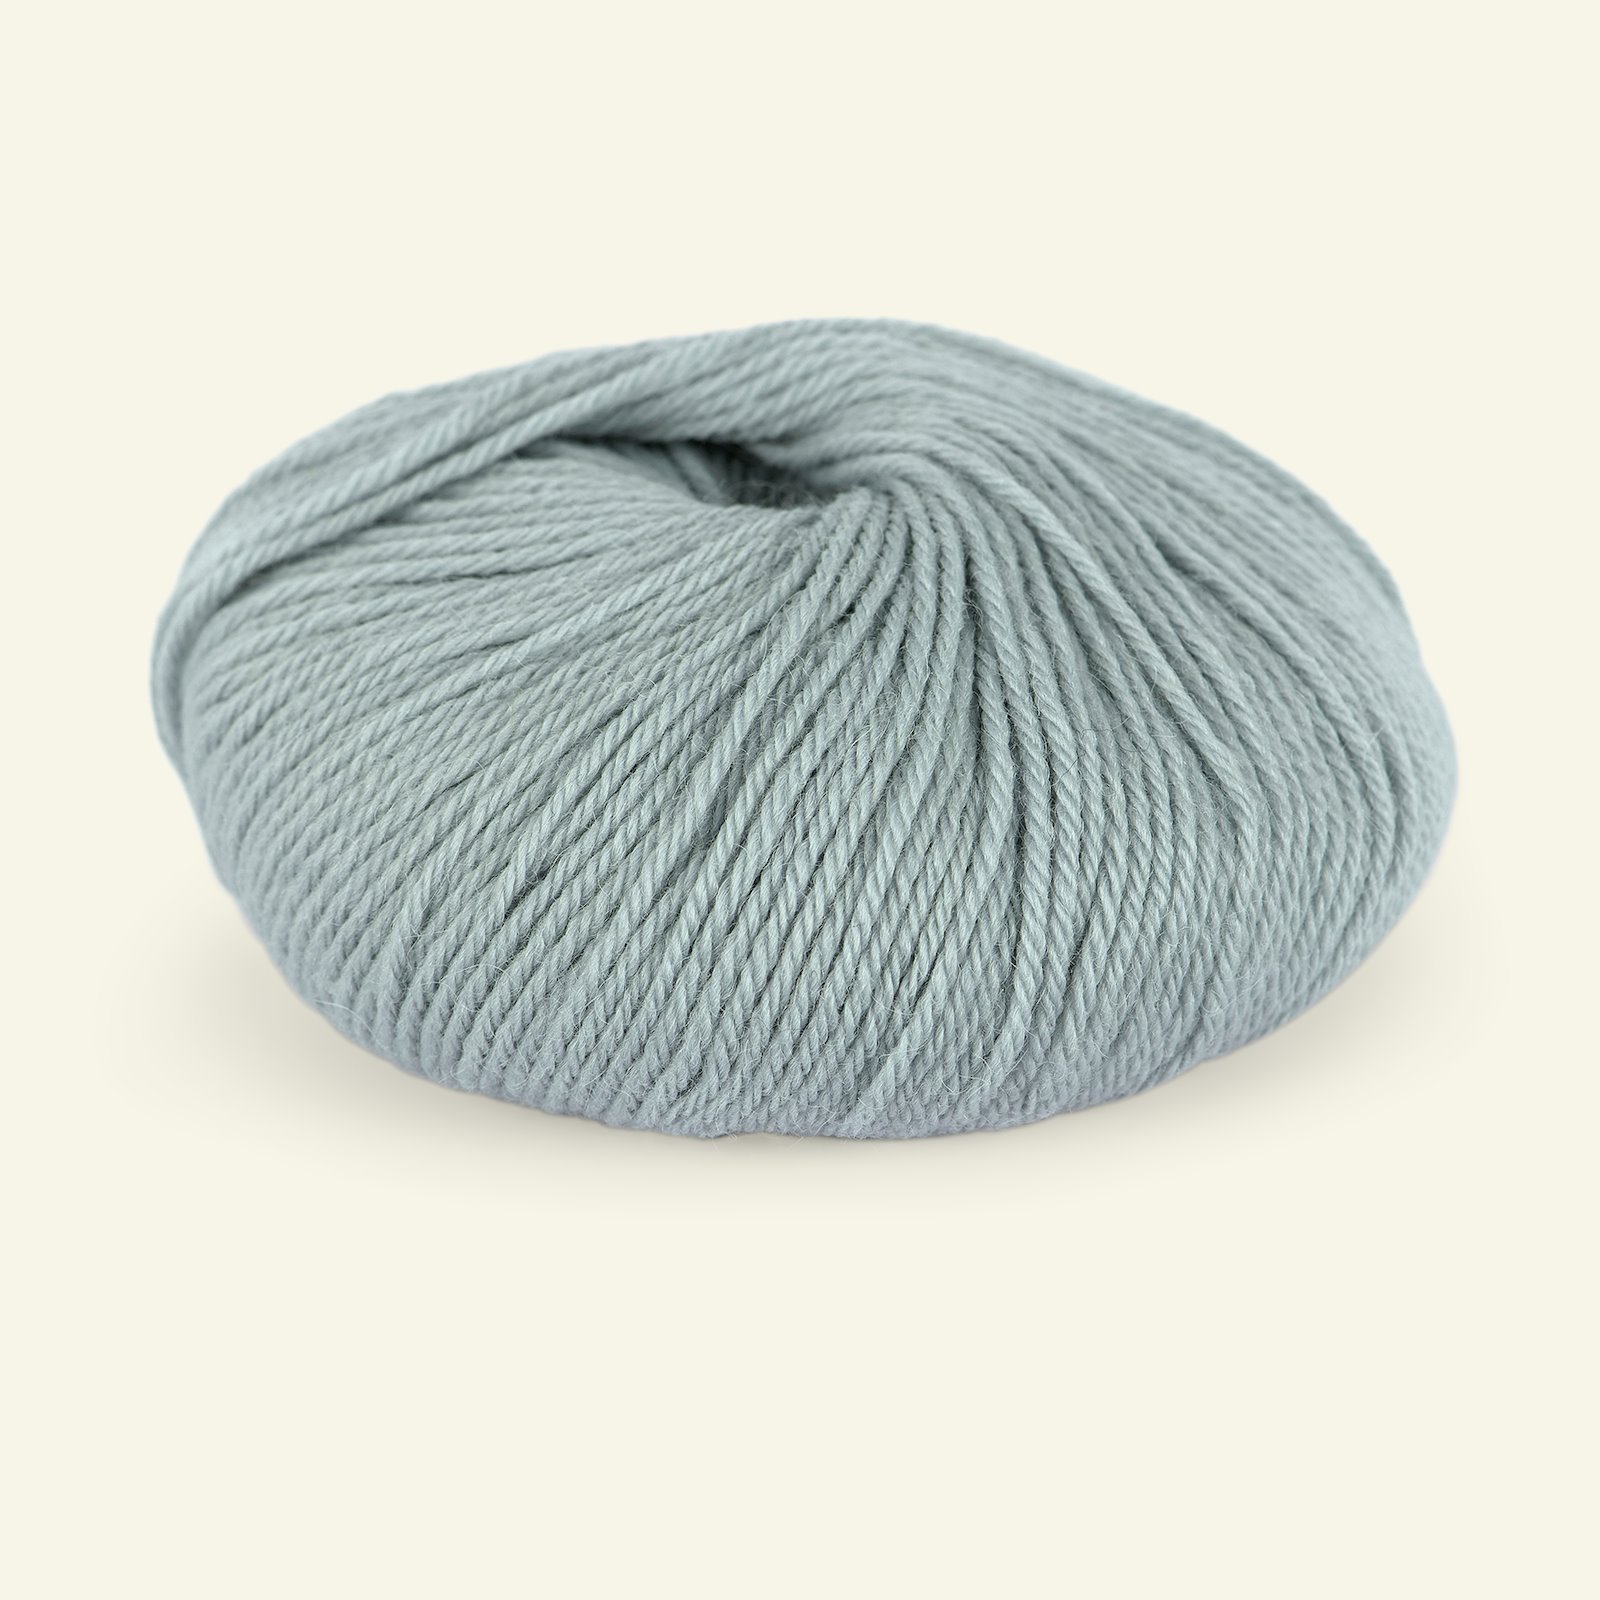 Du Store Alpakka, alpaca merino mixed yarn "Sterk", light blue (848) 90000675_pack_b